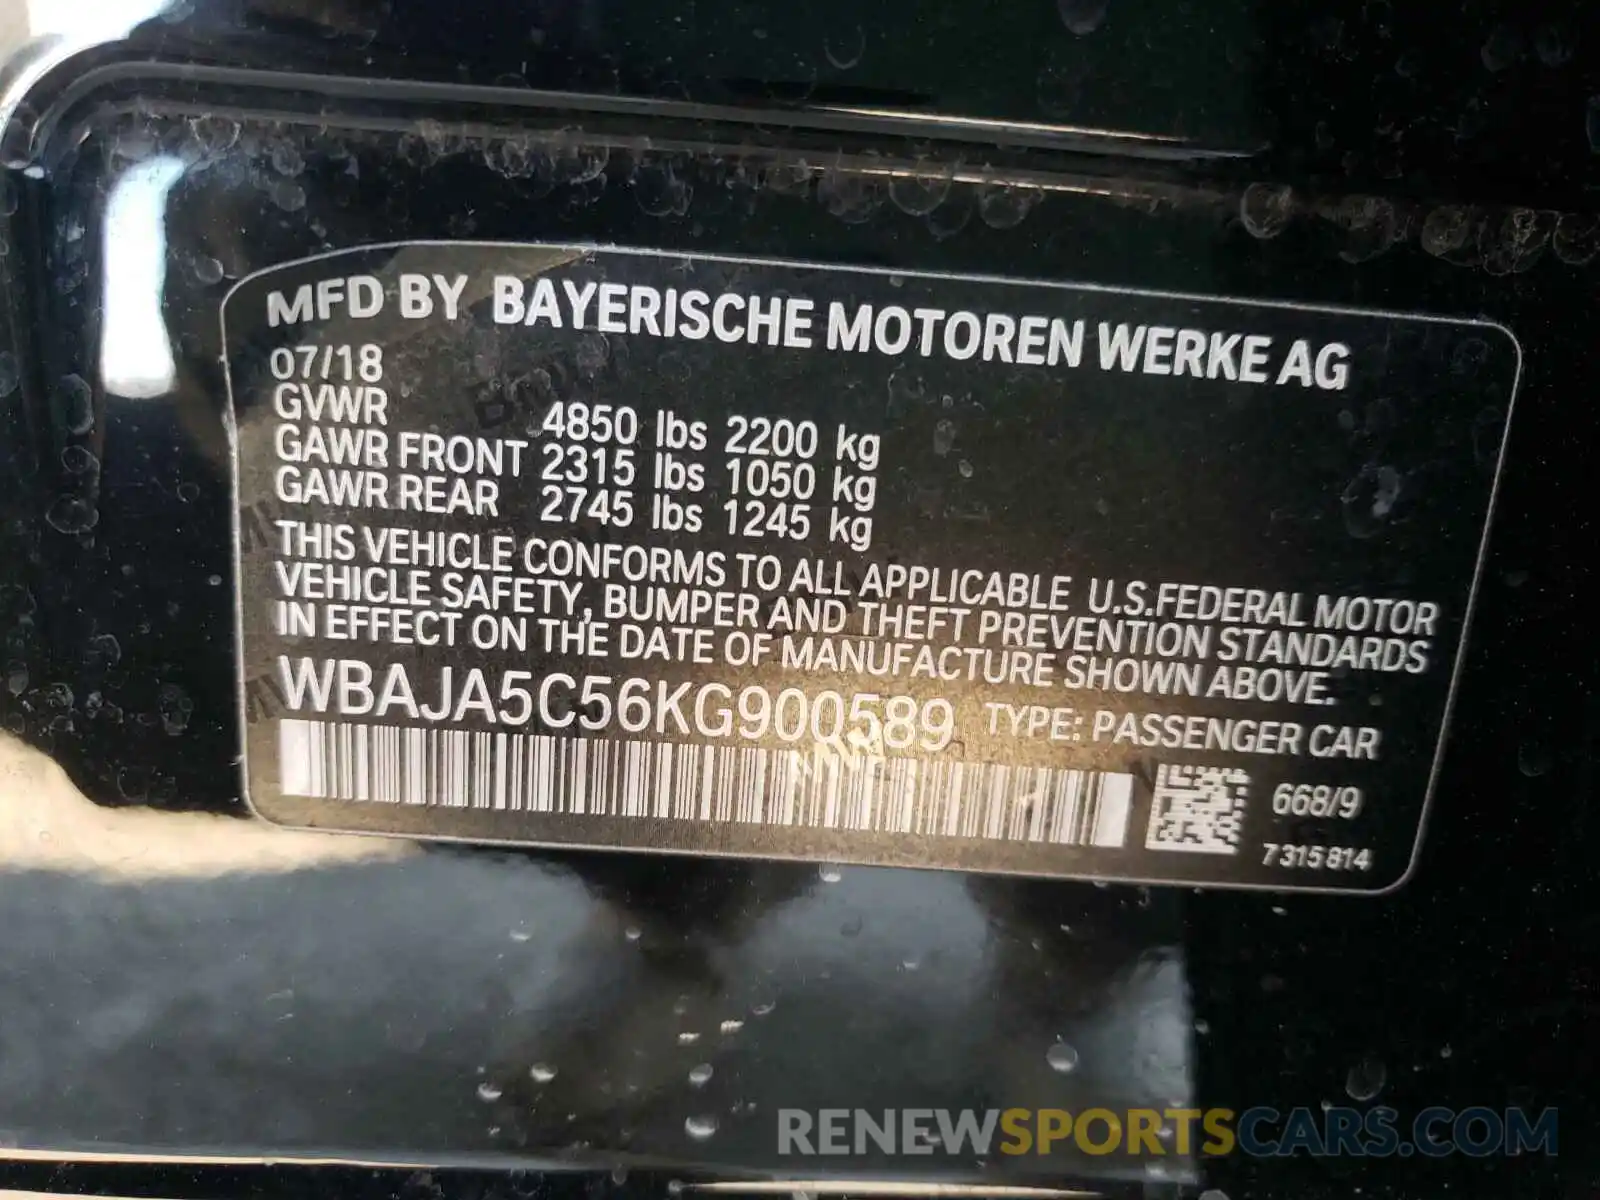 10 Photograph of a damaged car WBAJA5C56KG900589 BMW 5 SERIES 2019